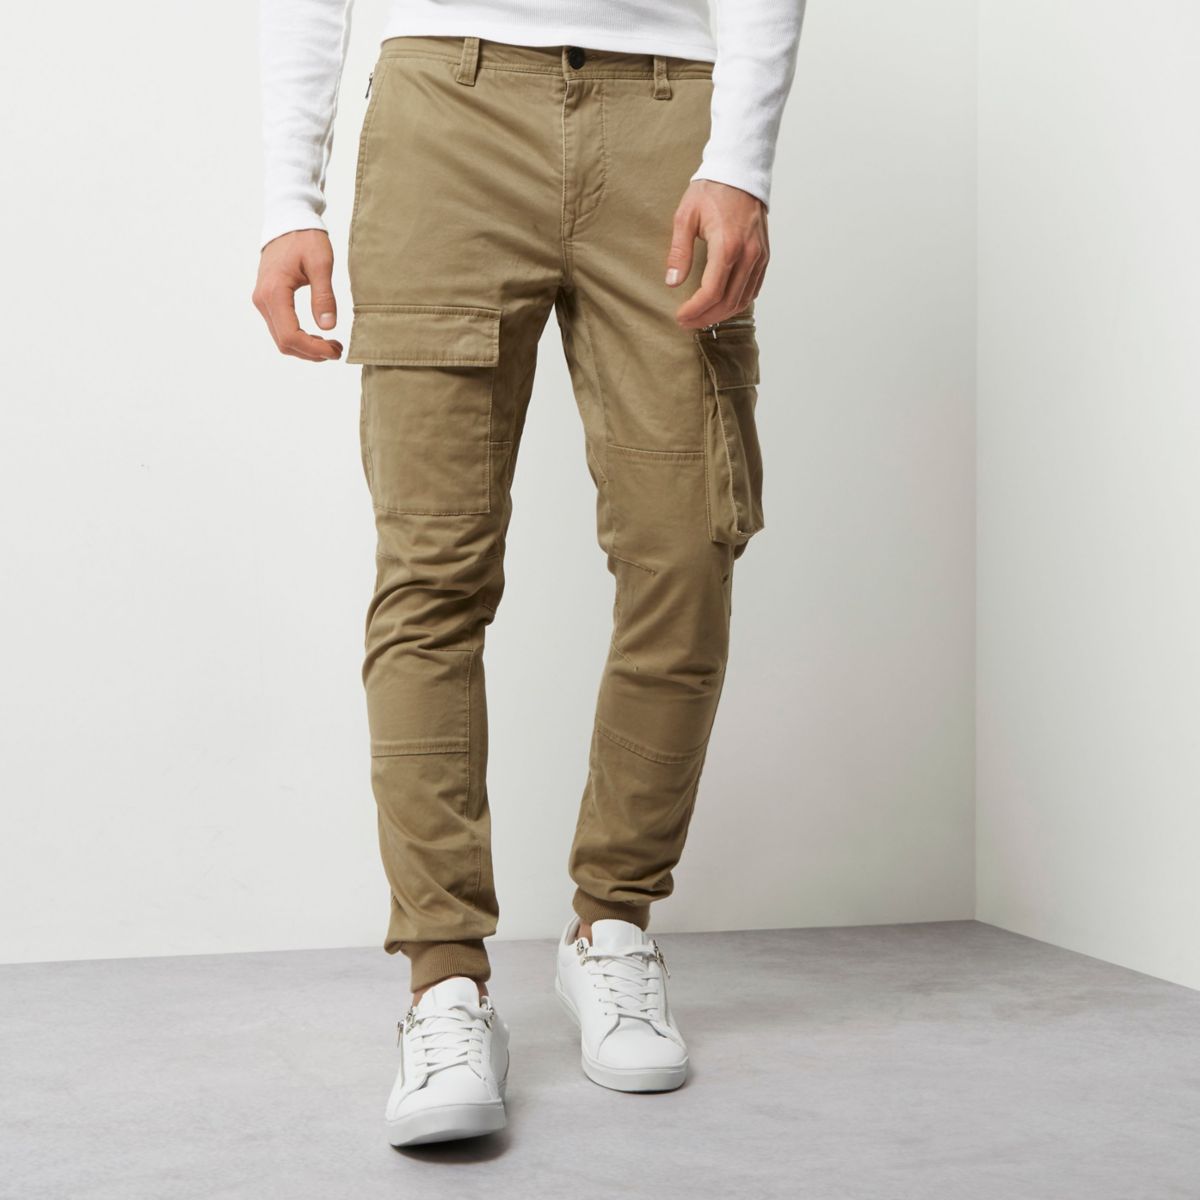 Tan cargo skinny fit trousers - Trousers - Sale - men